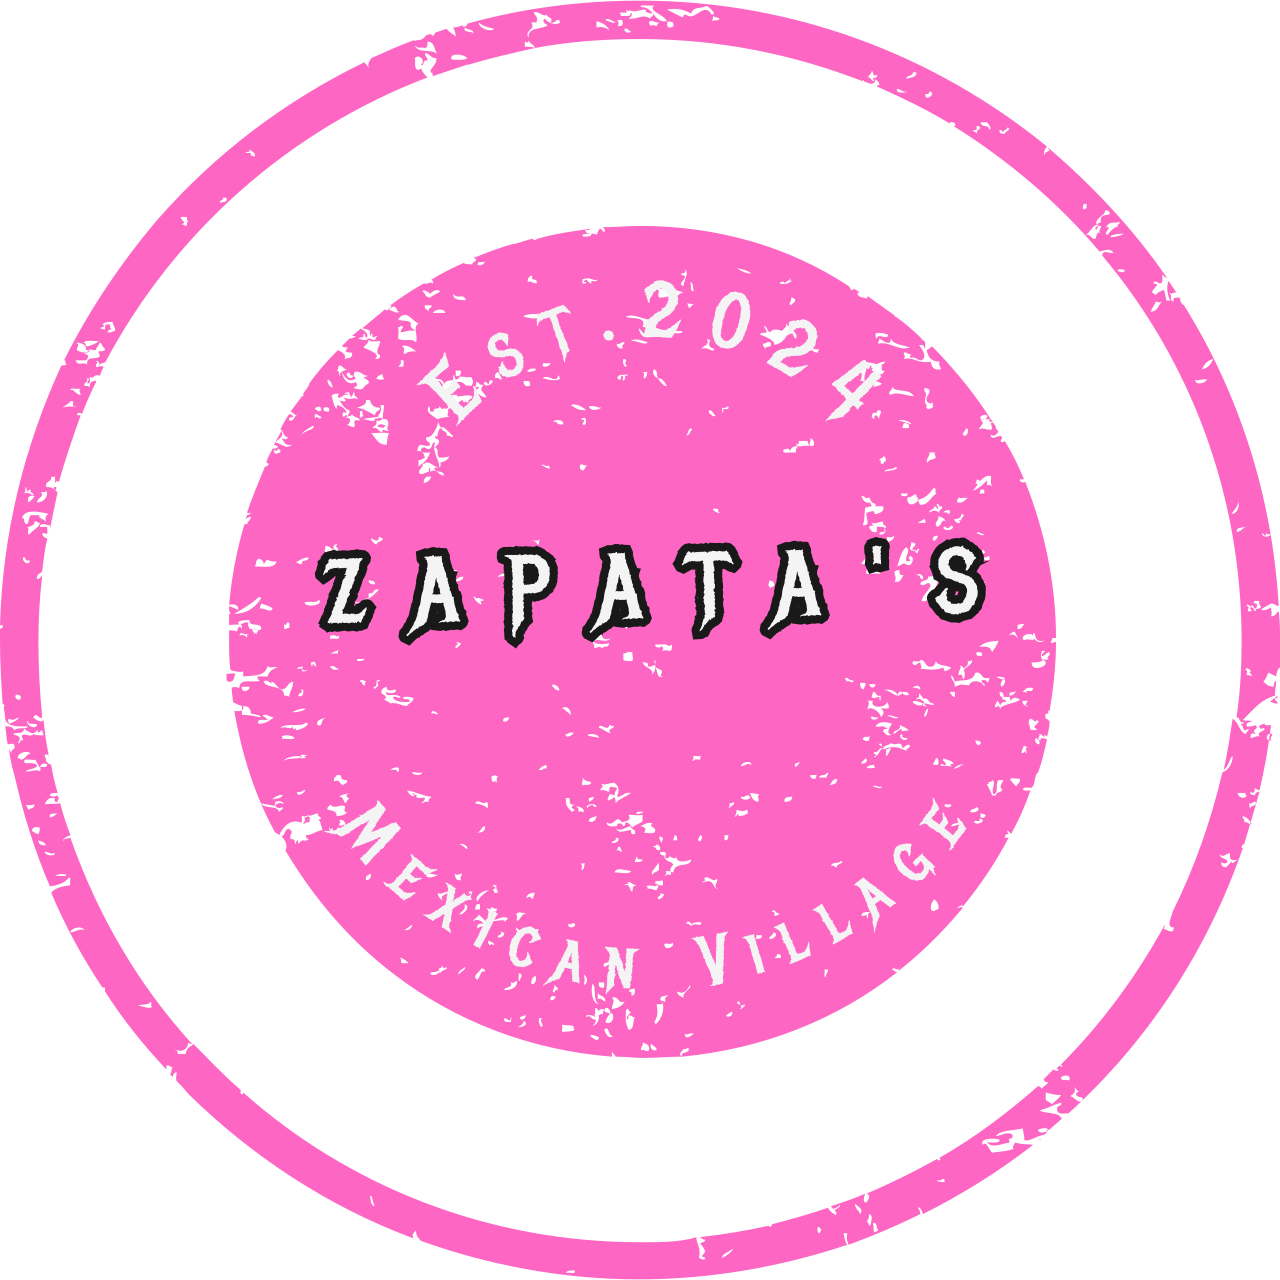  Zapata's 's logo